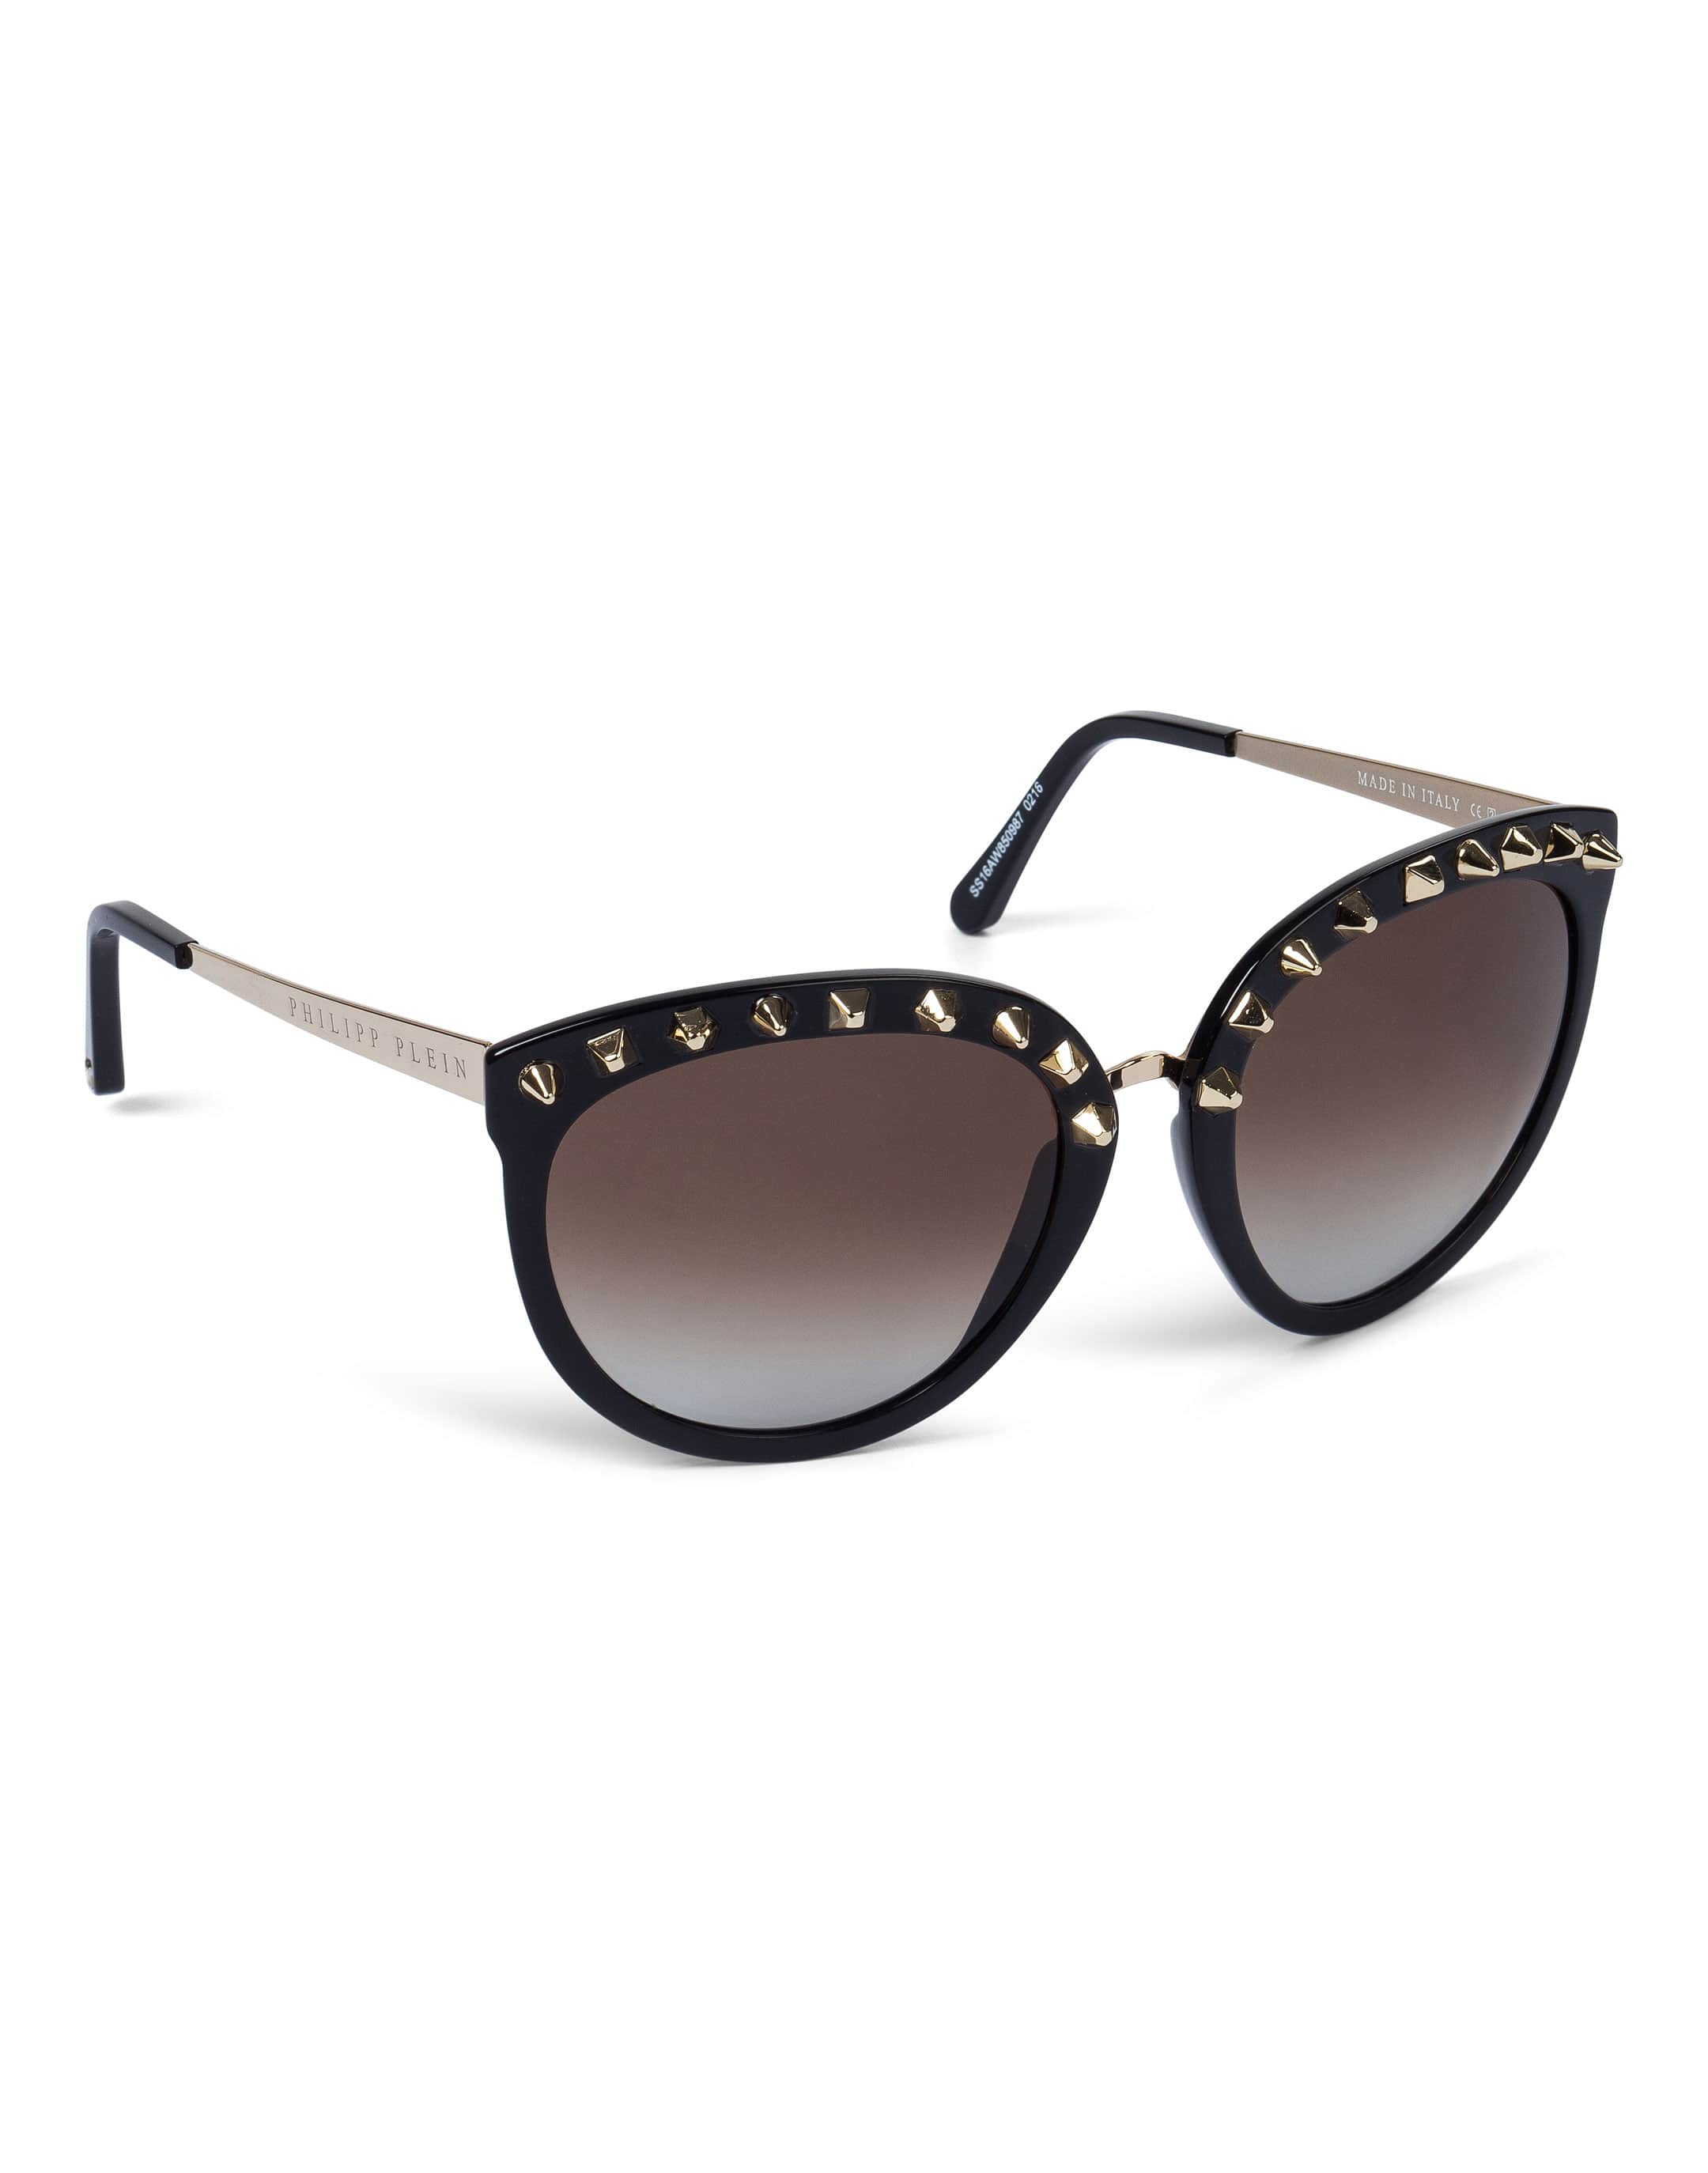 Sunglasses "Karol" | Philipp Plein Outlet